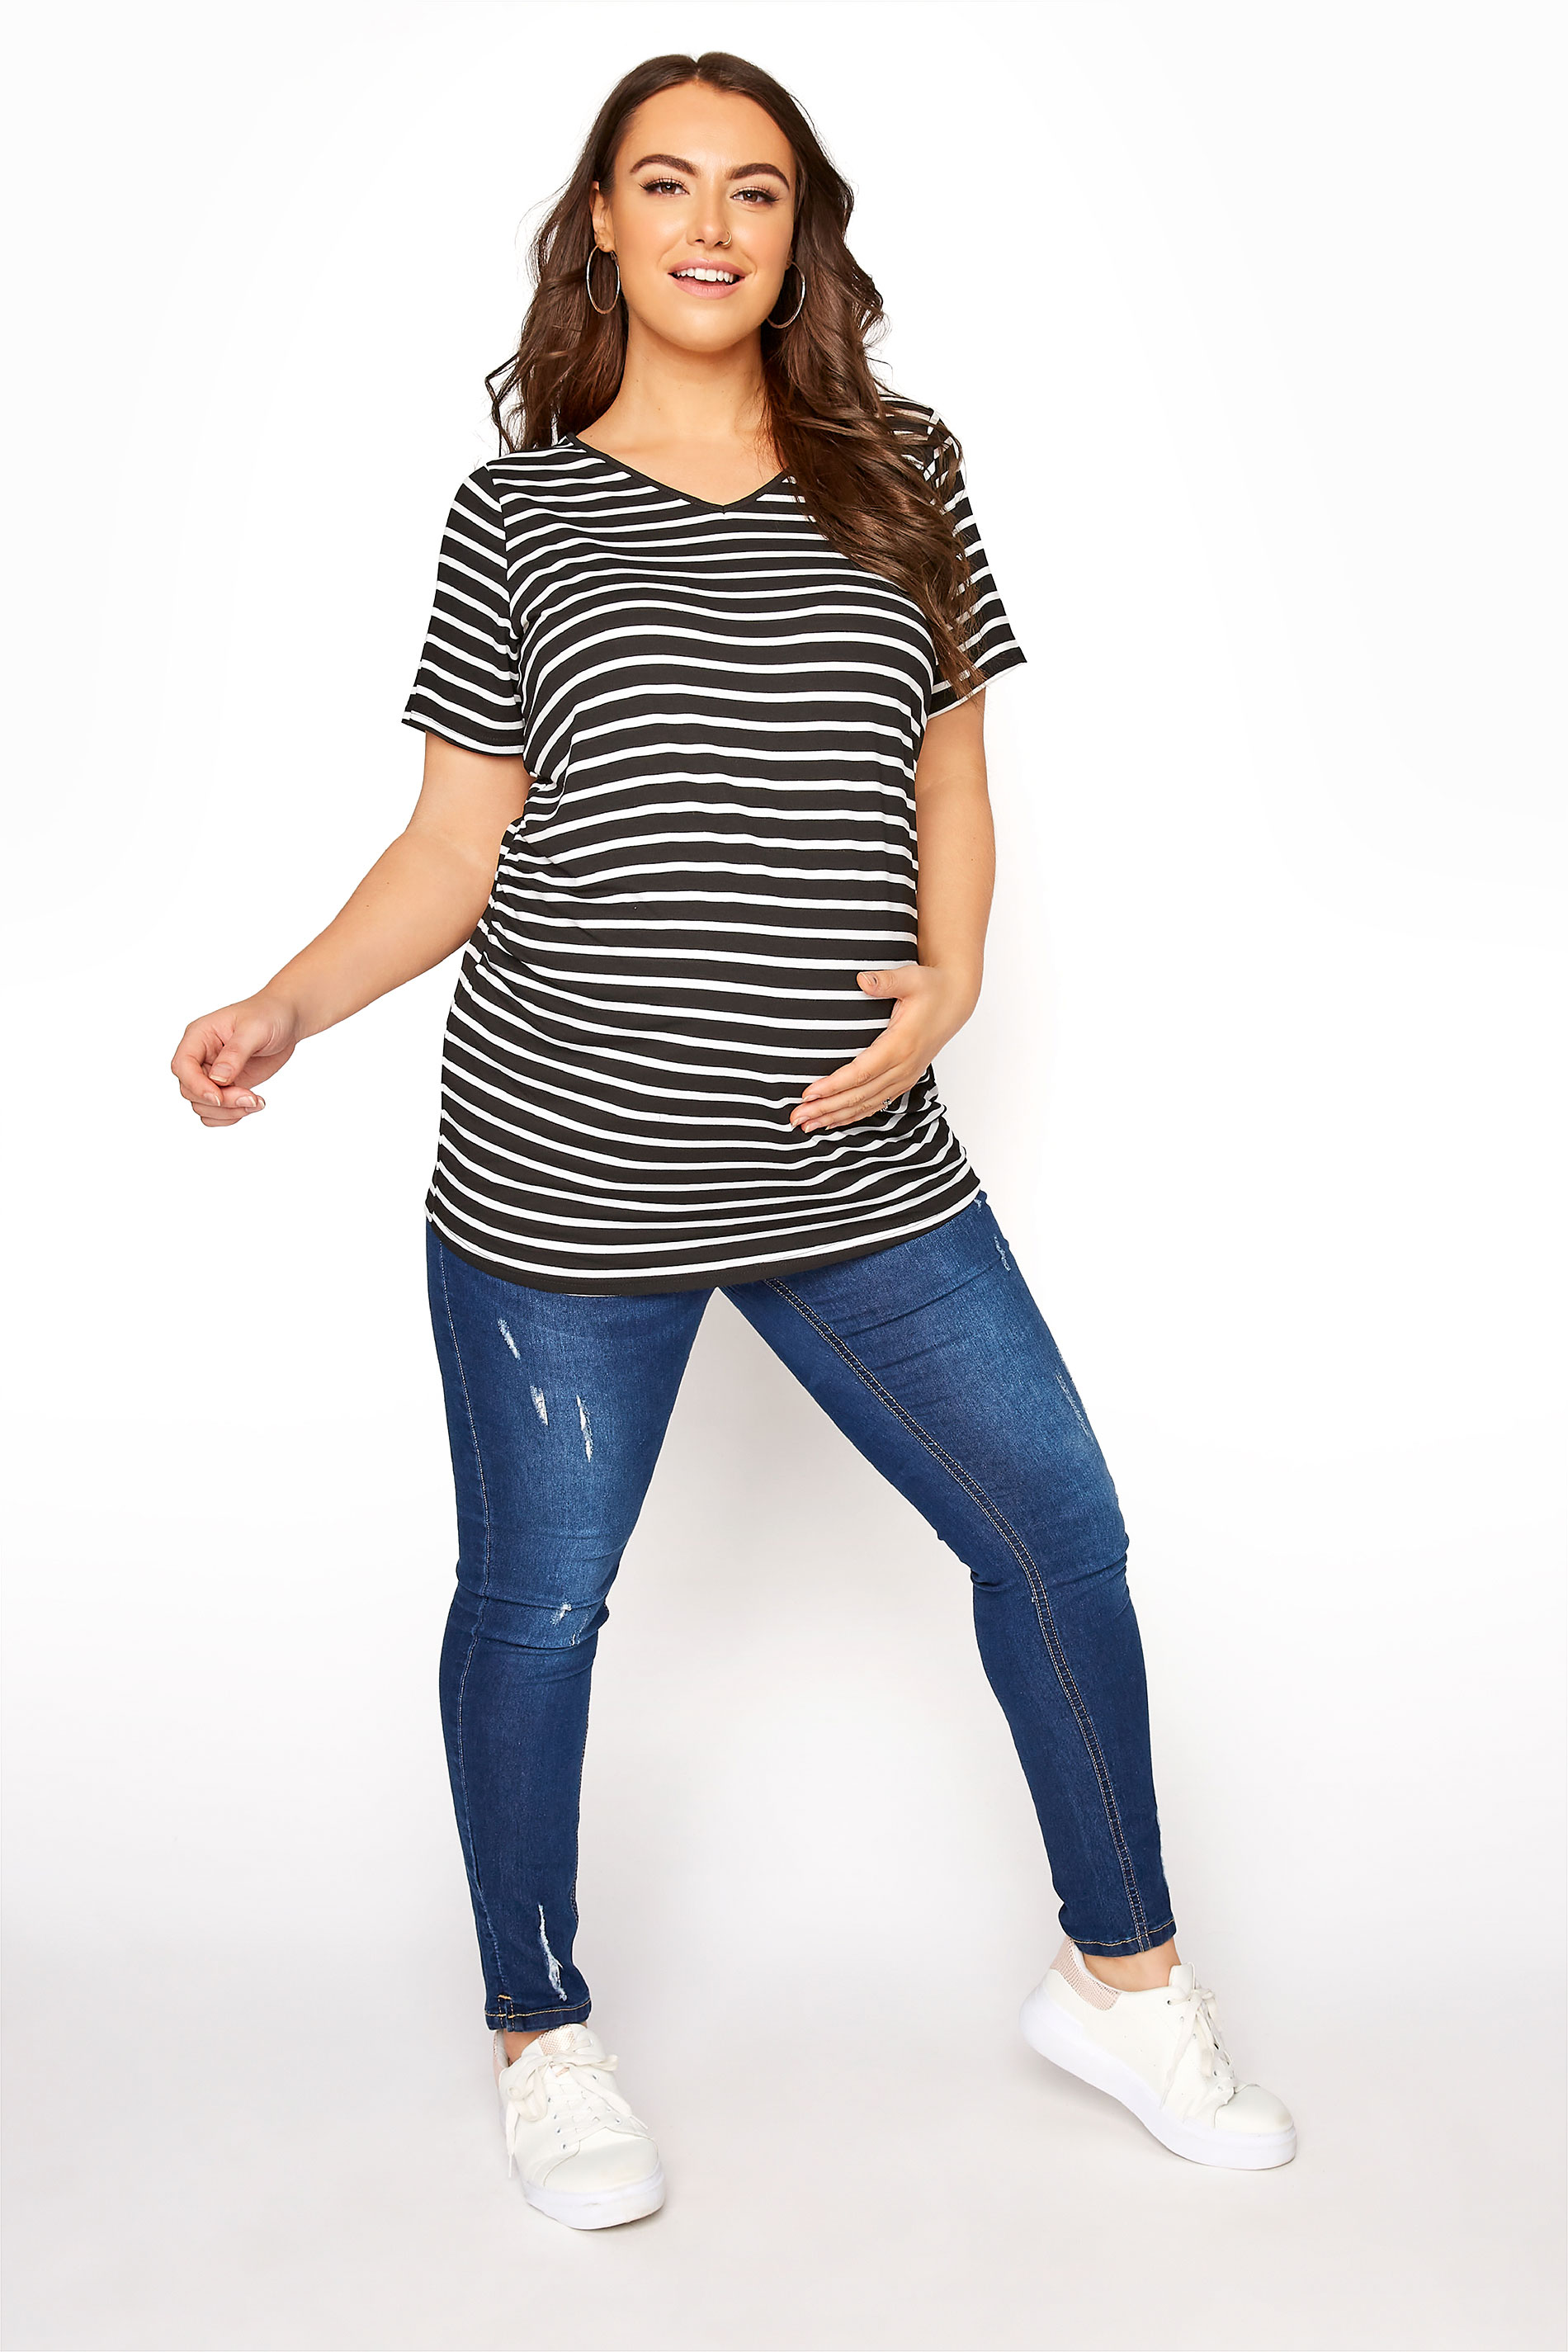 BUMP IT UP MATERNITY Black Stripe Short Sleeve T-Shirt | Your Clothing 2